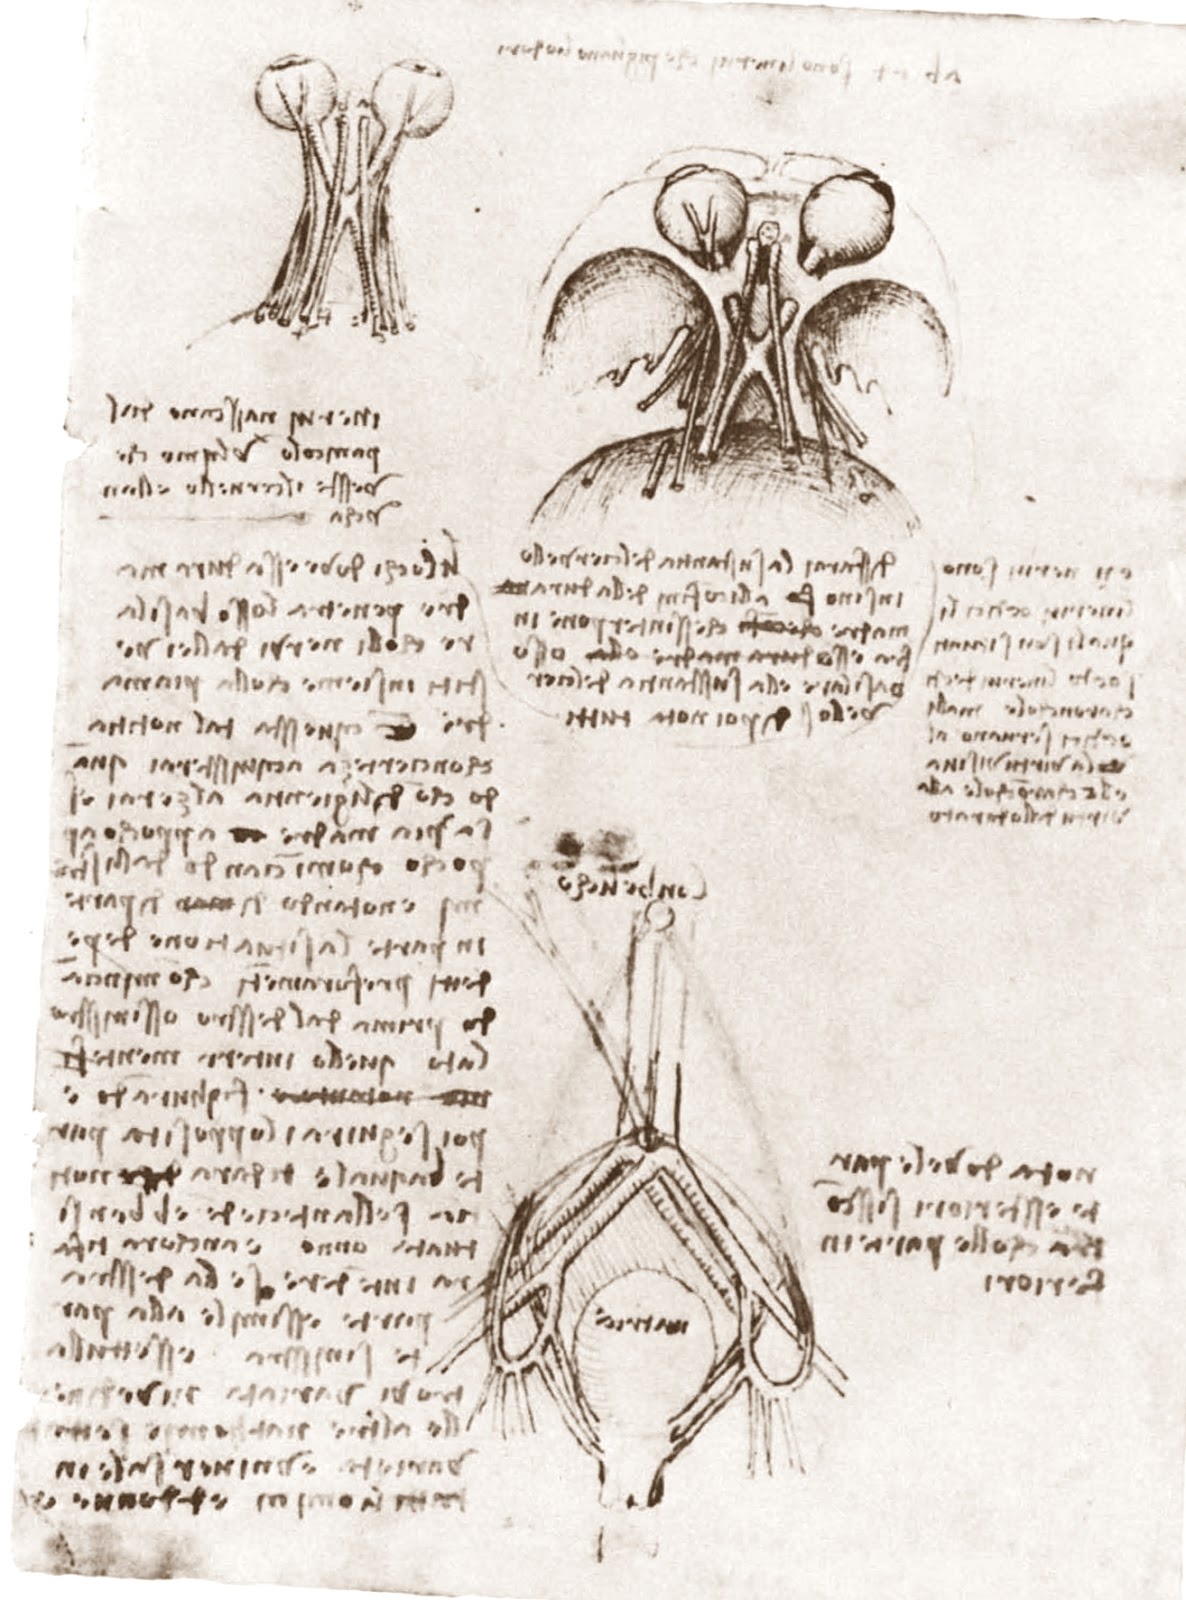 Leonardo+da+Vinci-1452-1519 (764).jpg